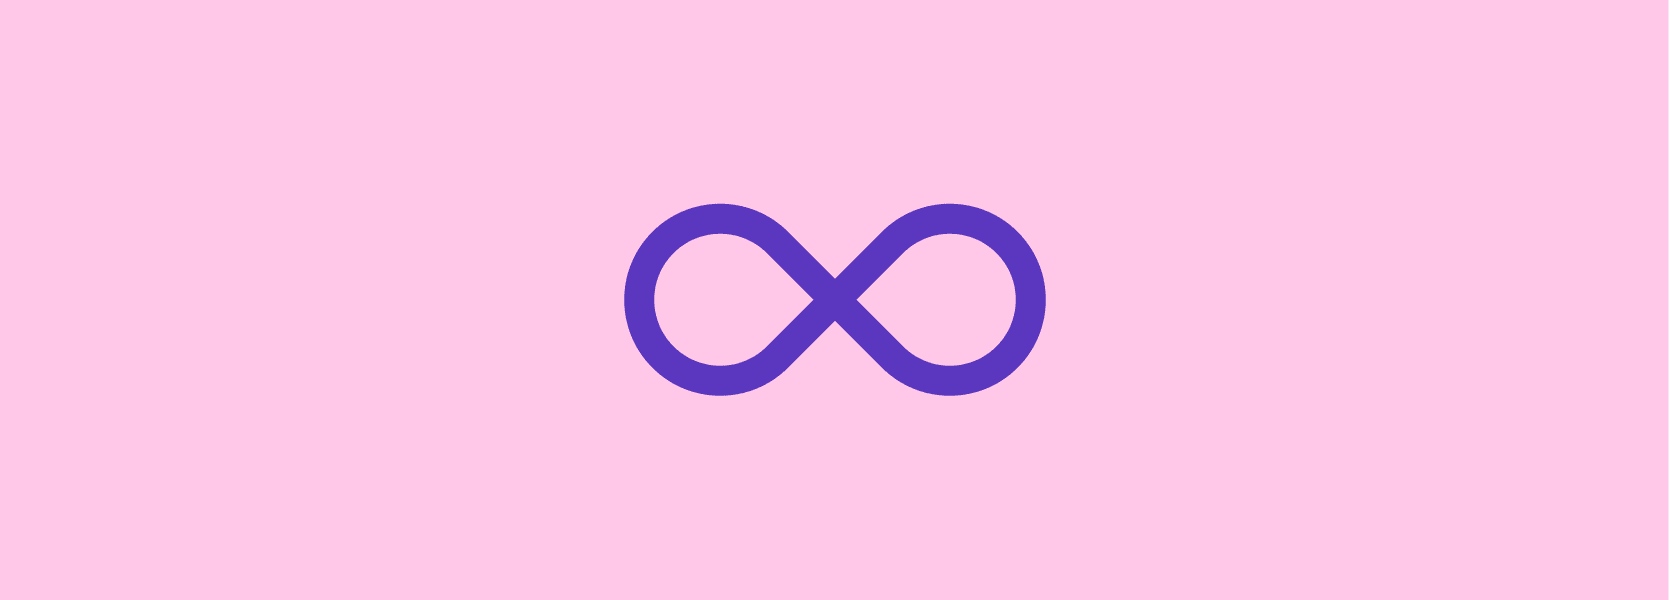 Eternity symbol on pink background